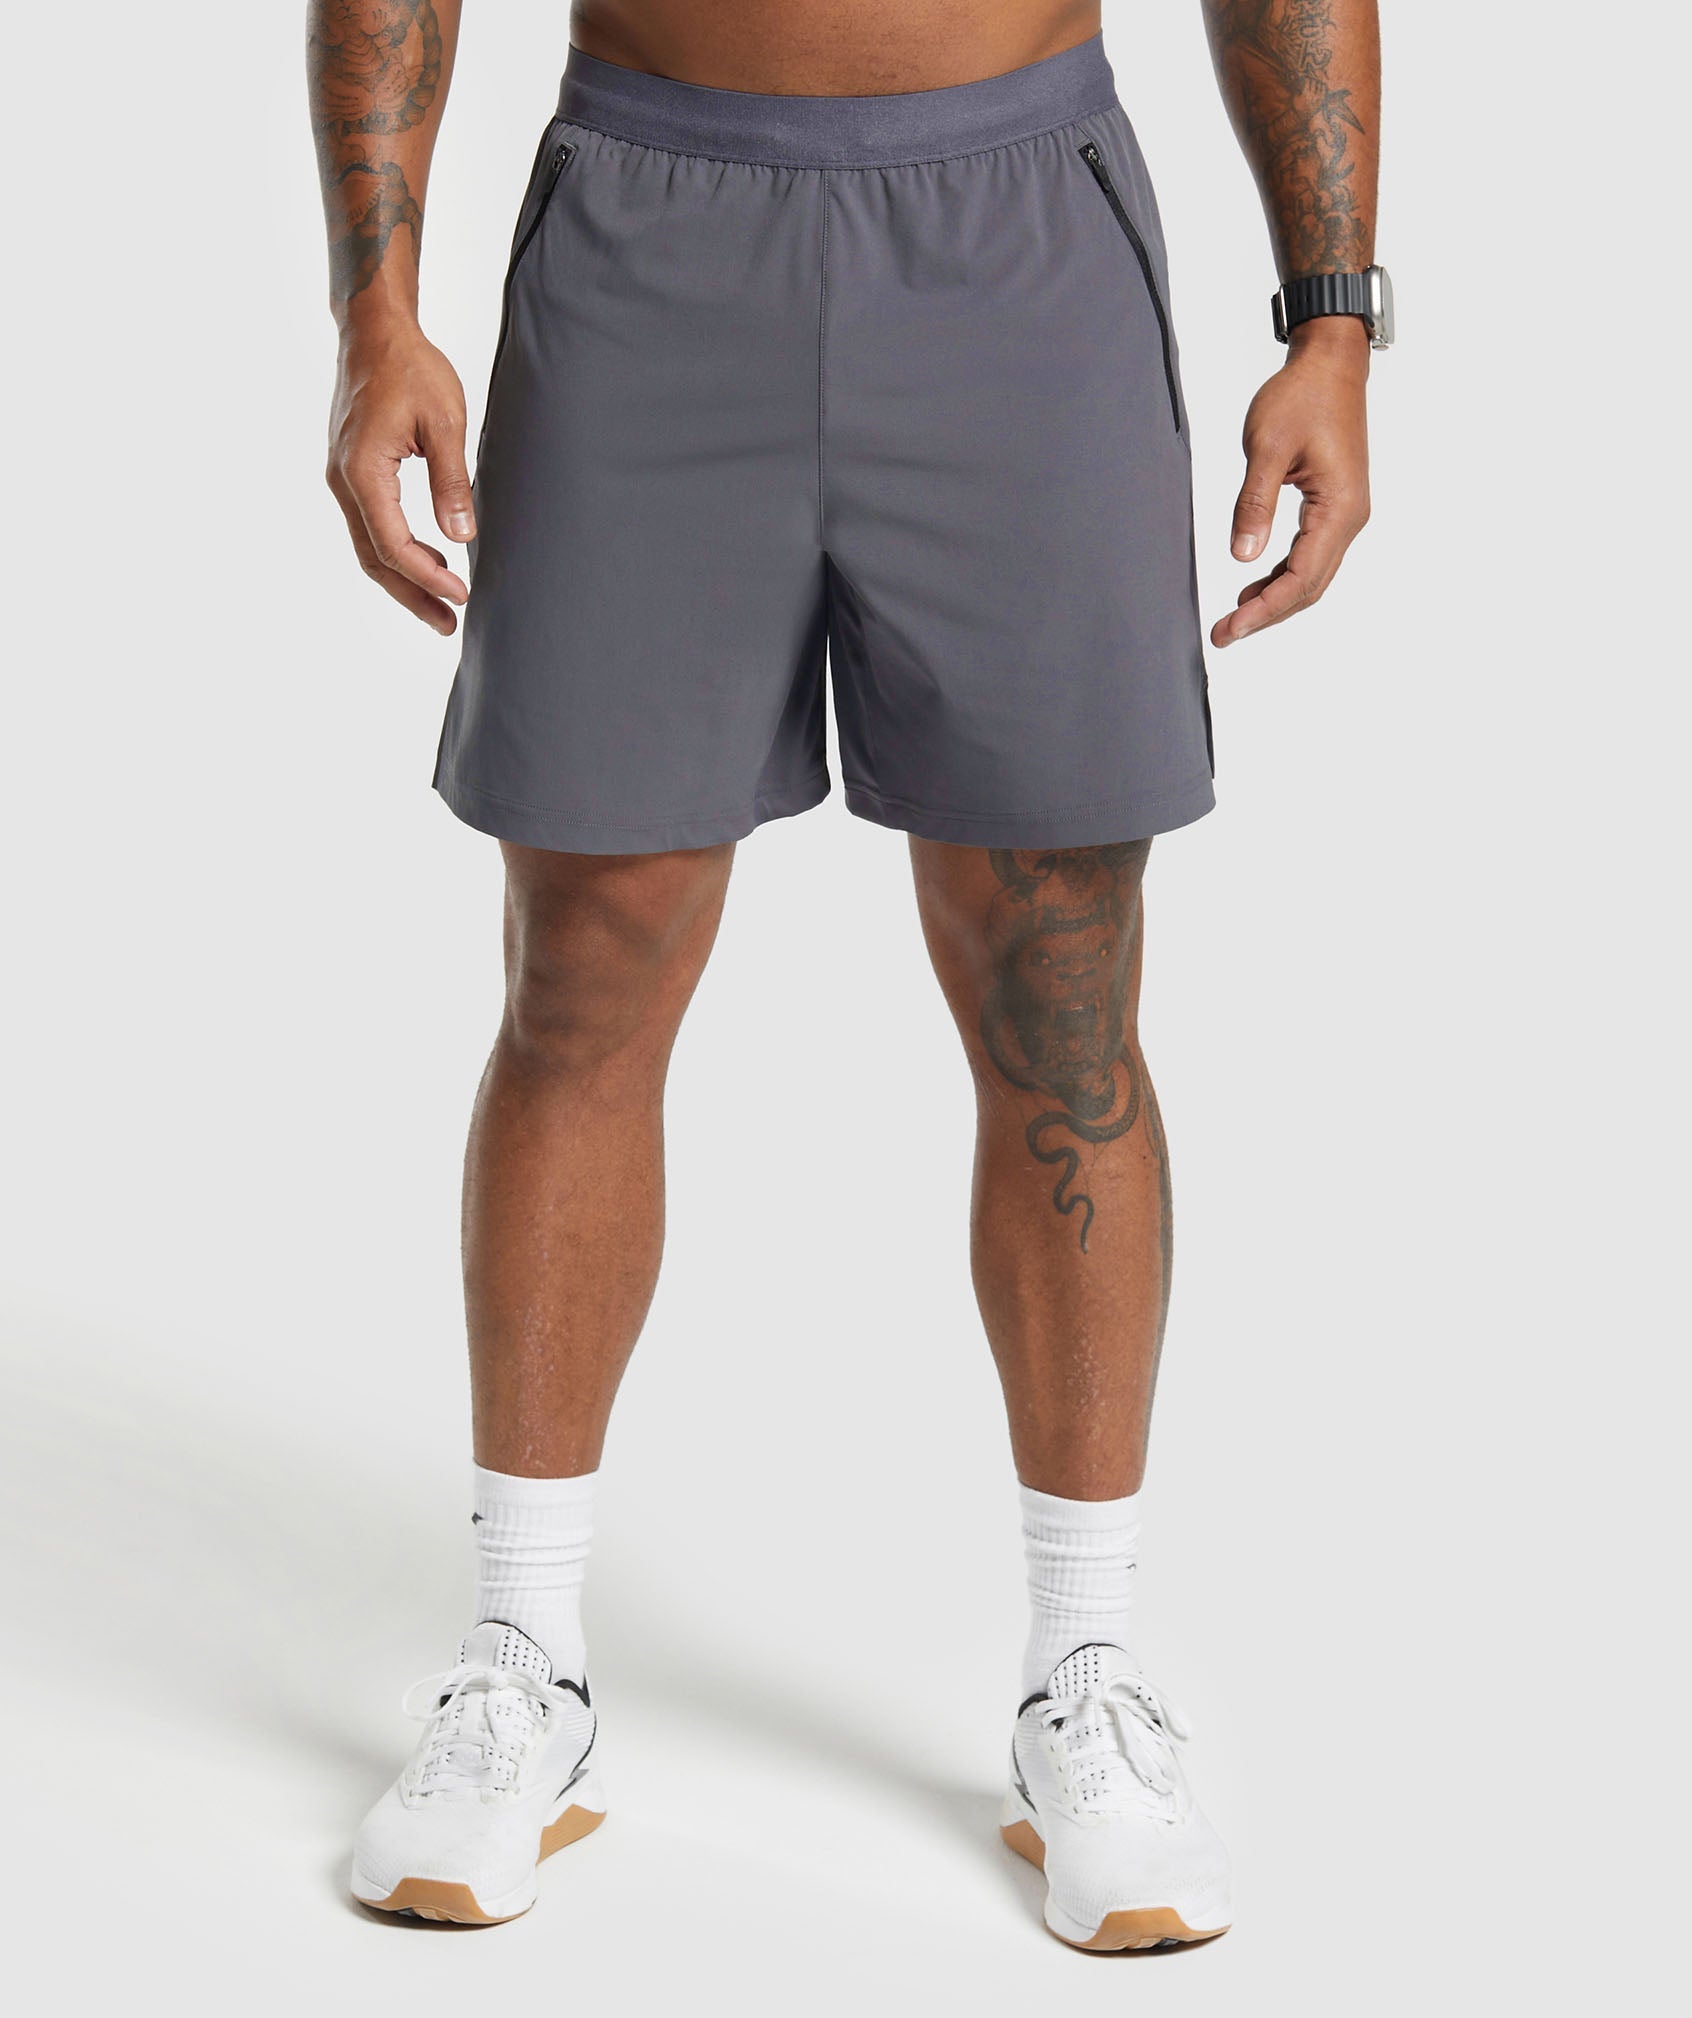 Apex 7" Hybrid Shorts in Dark Grey